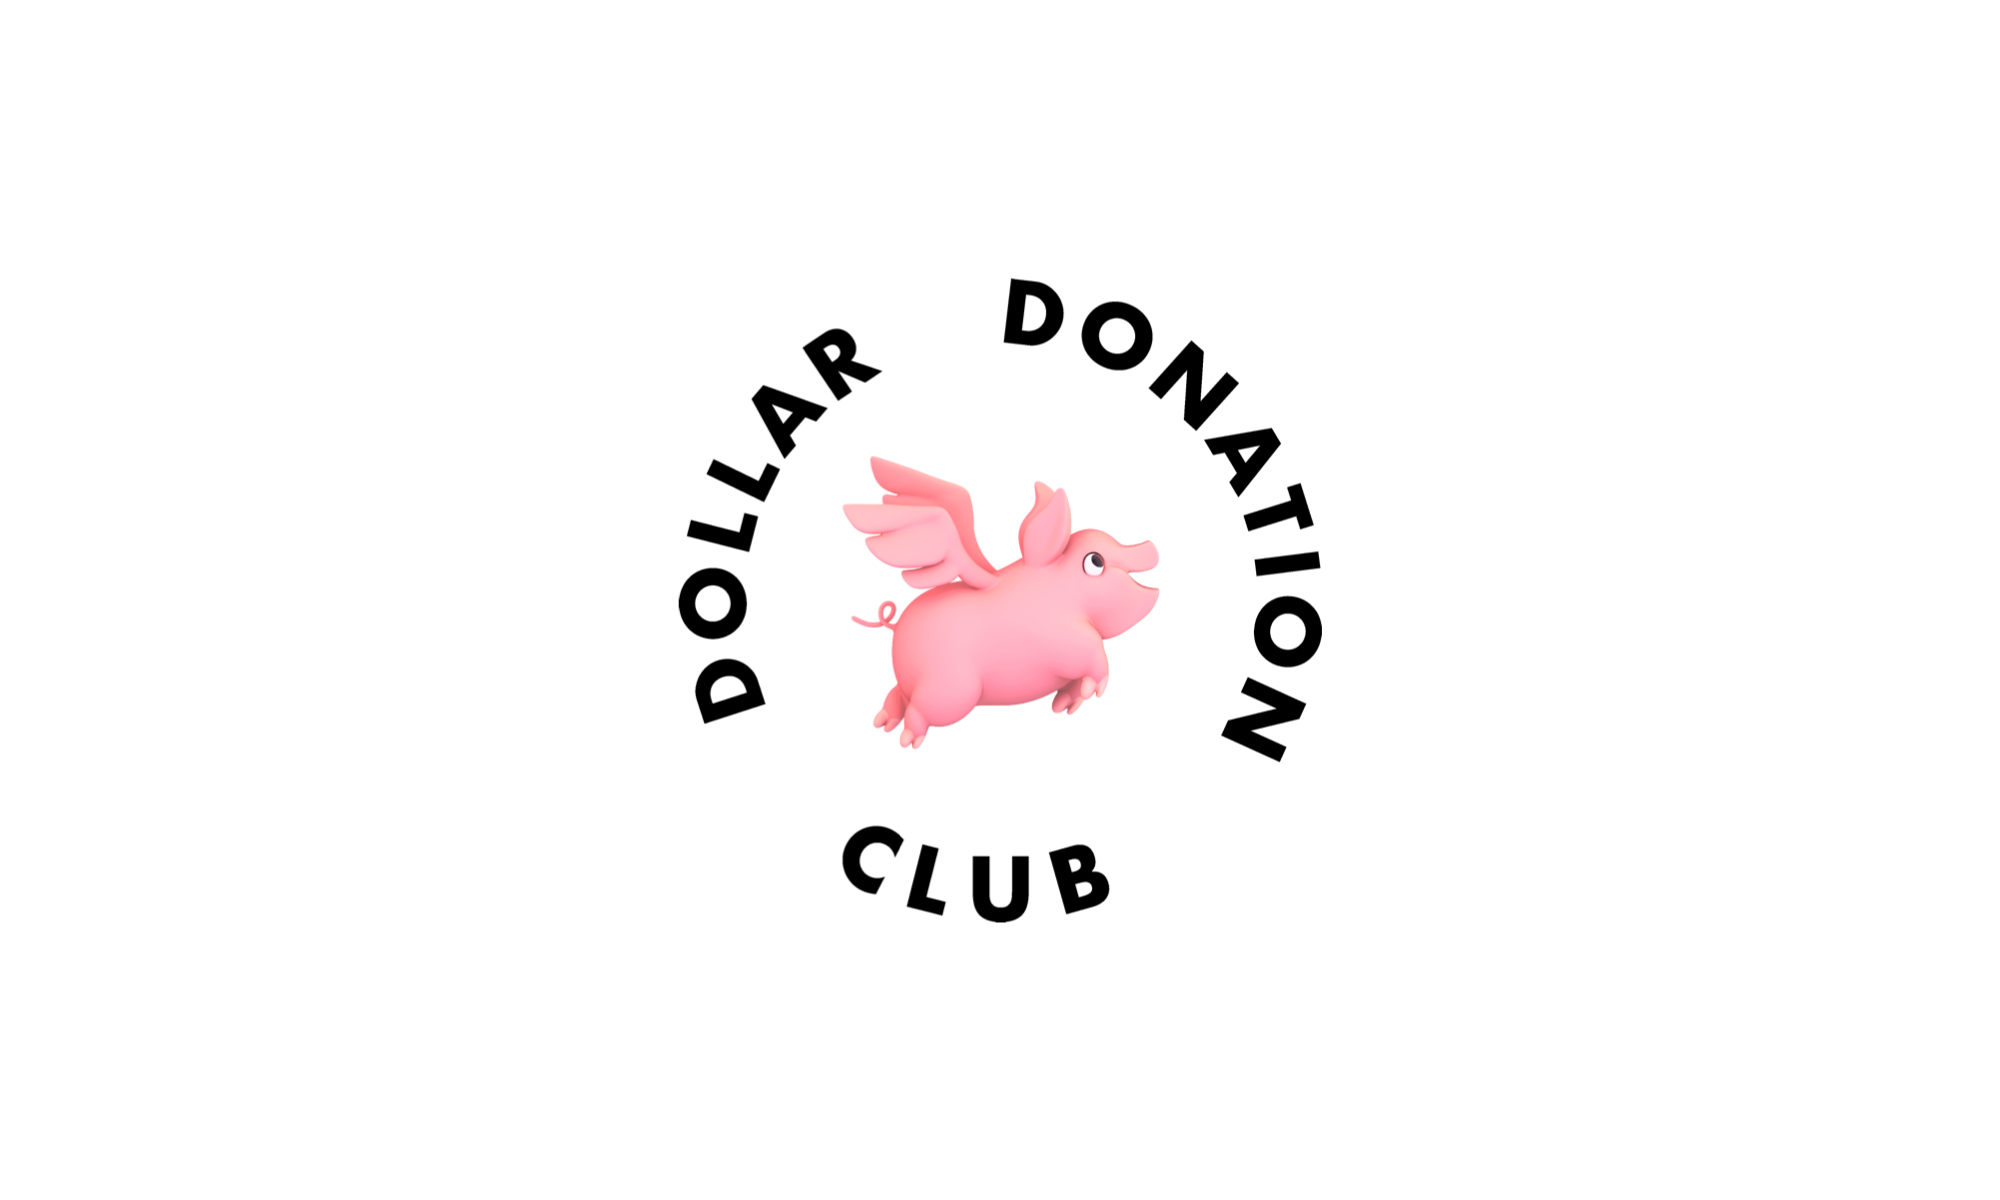 Dollar Donation Club